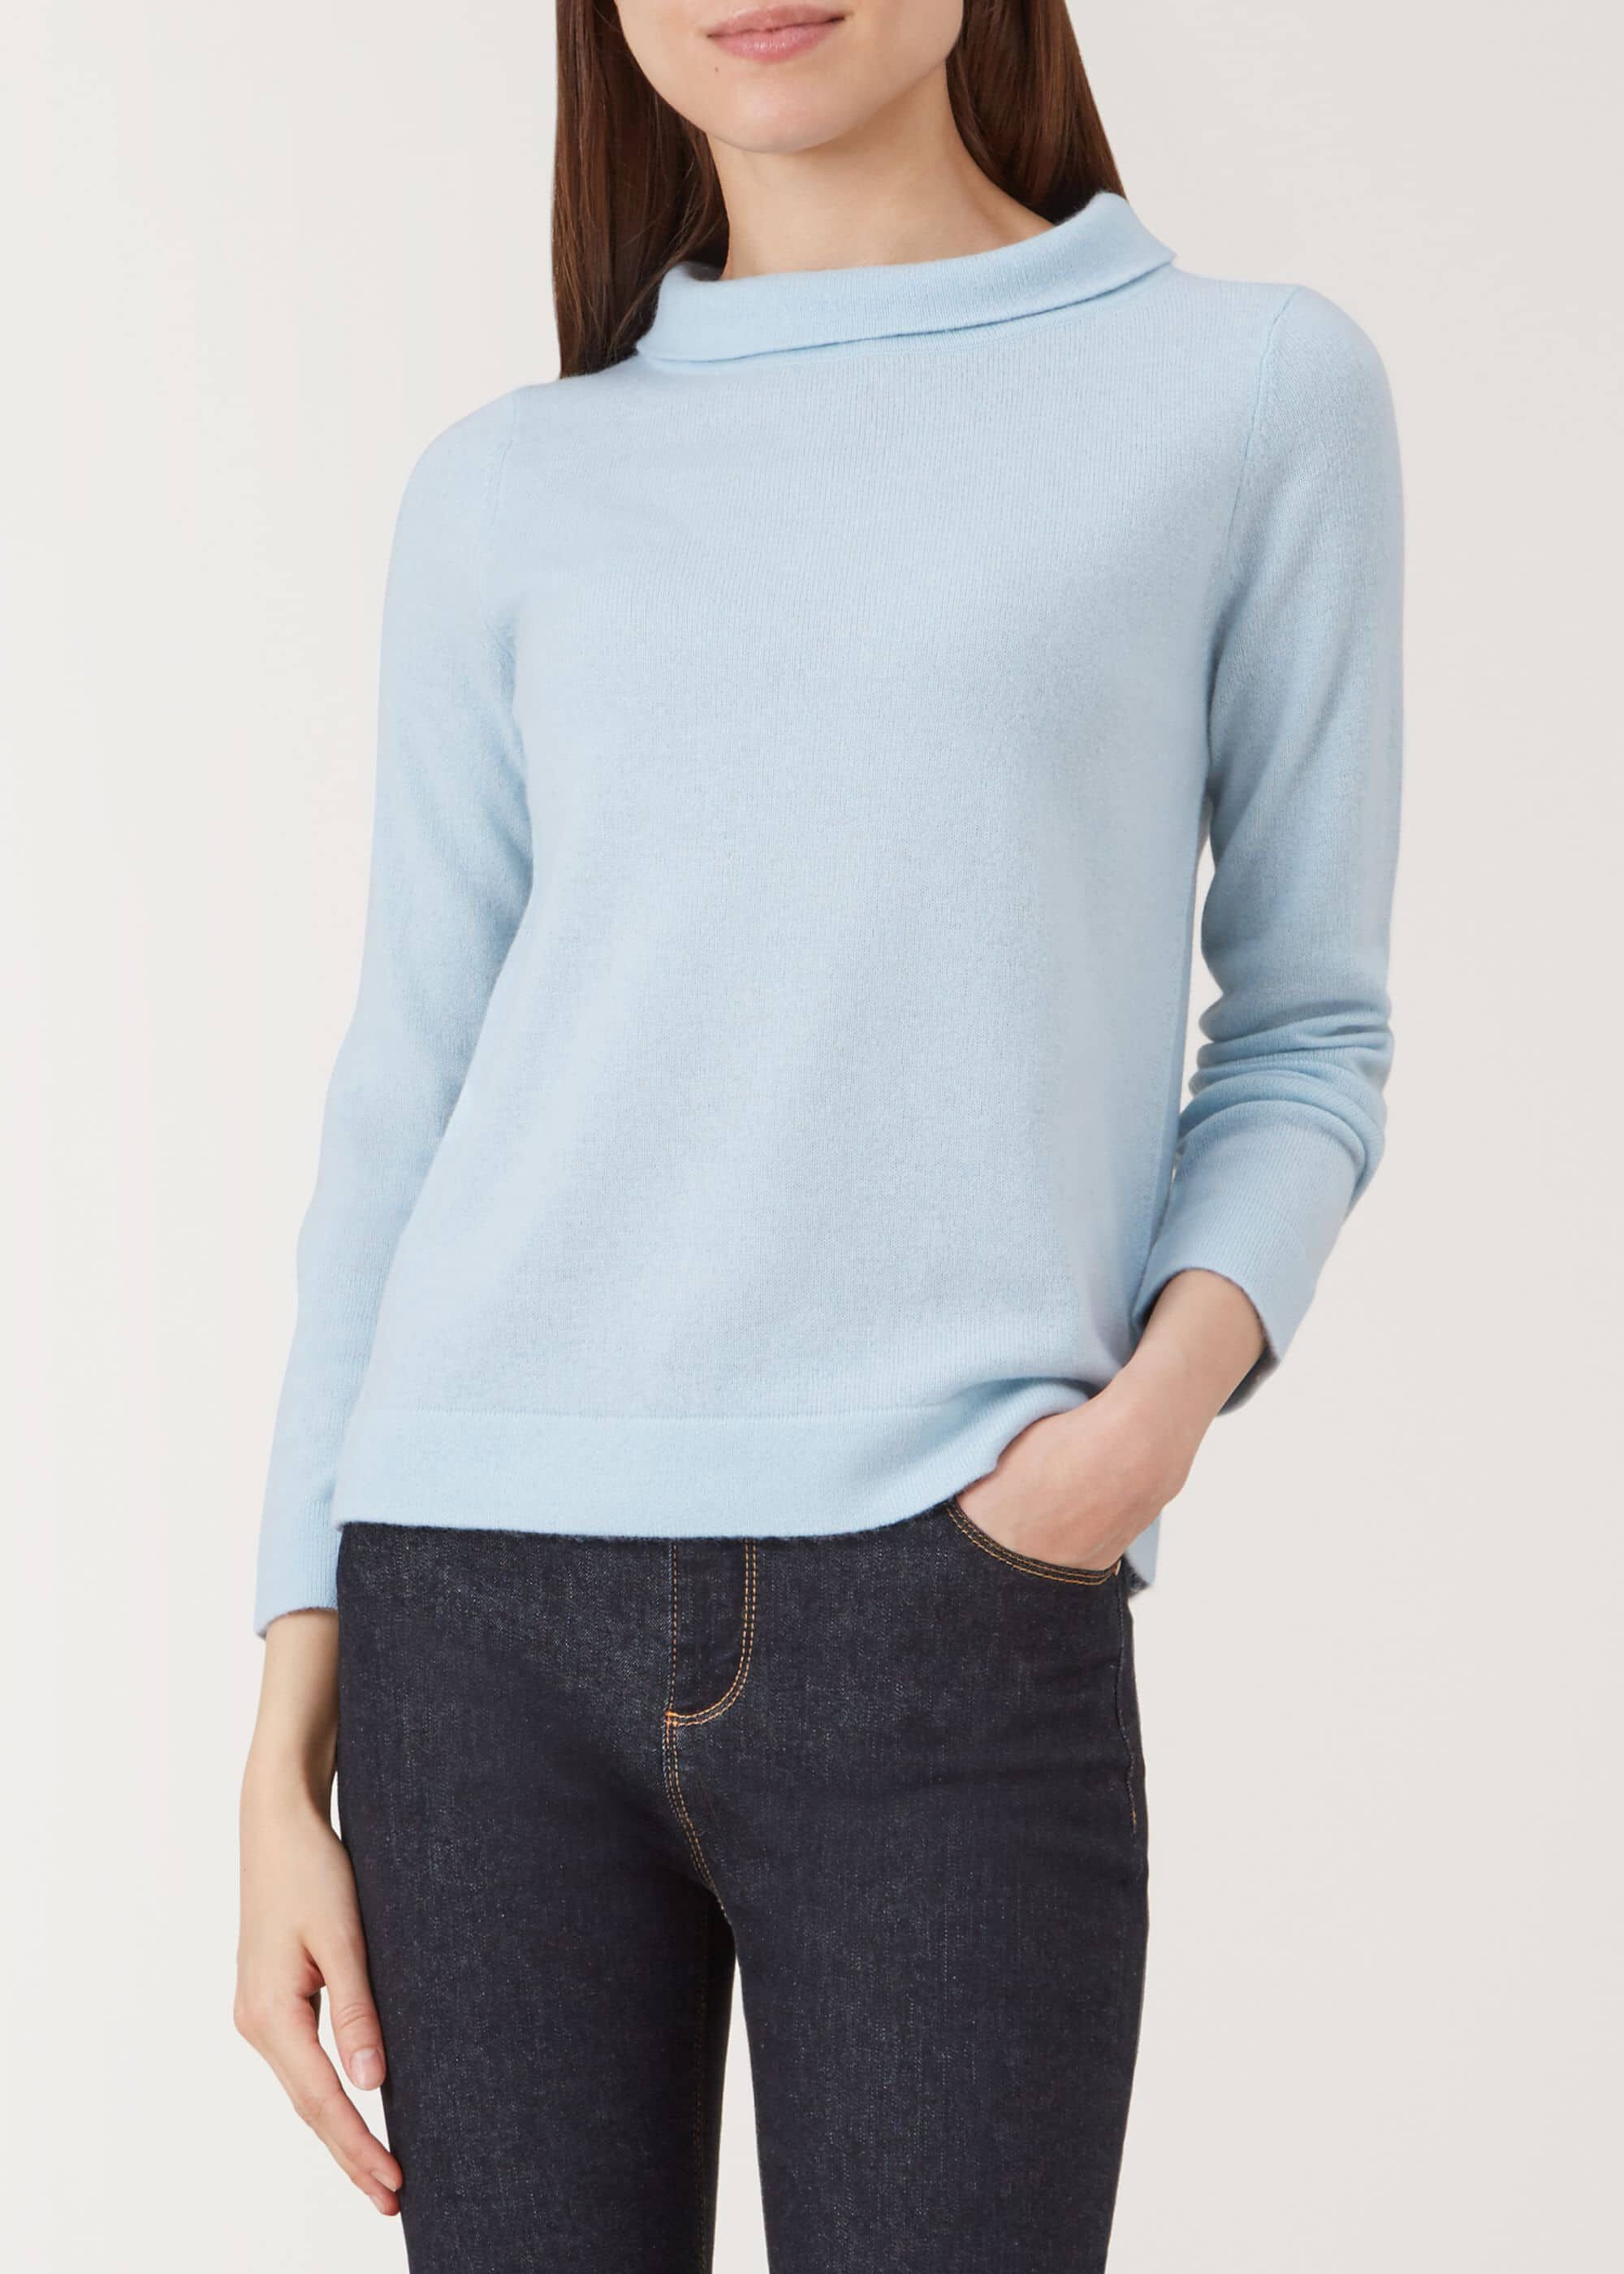 Hobbs Audrey Wool Blend Sweater Pullover Long Sleeve | eBay